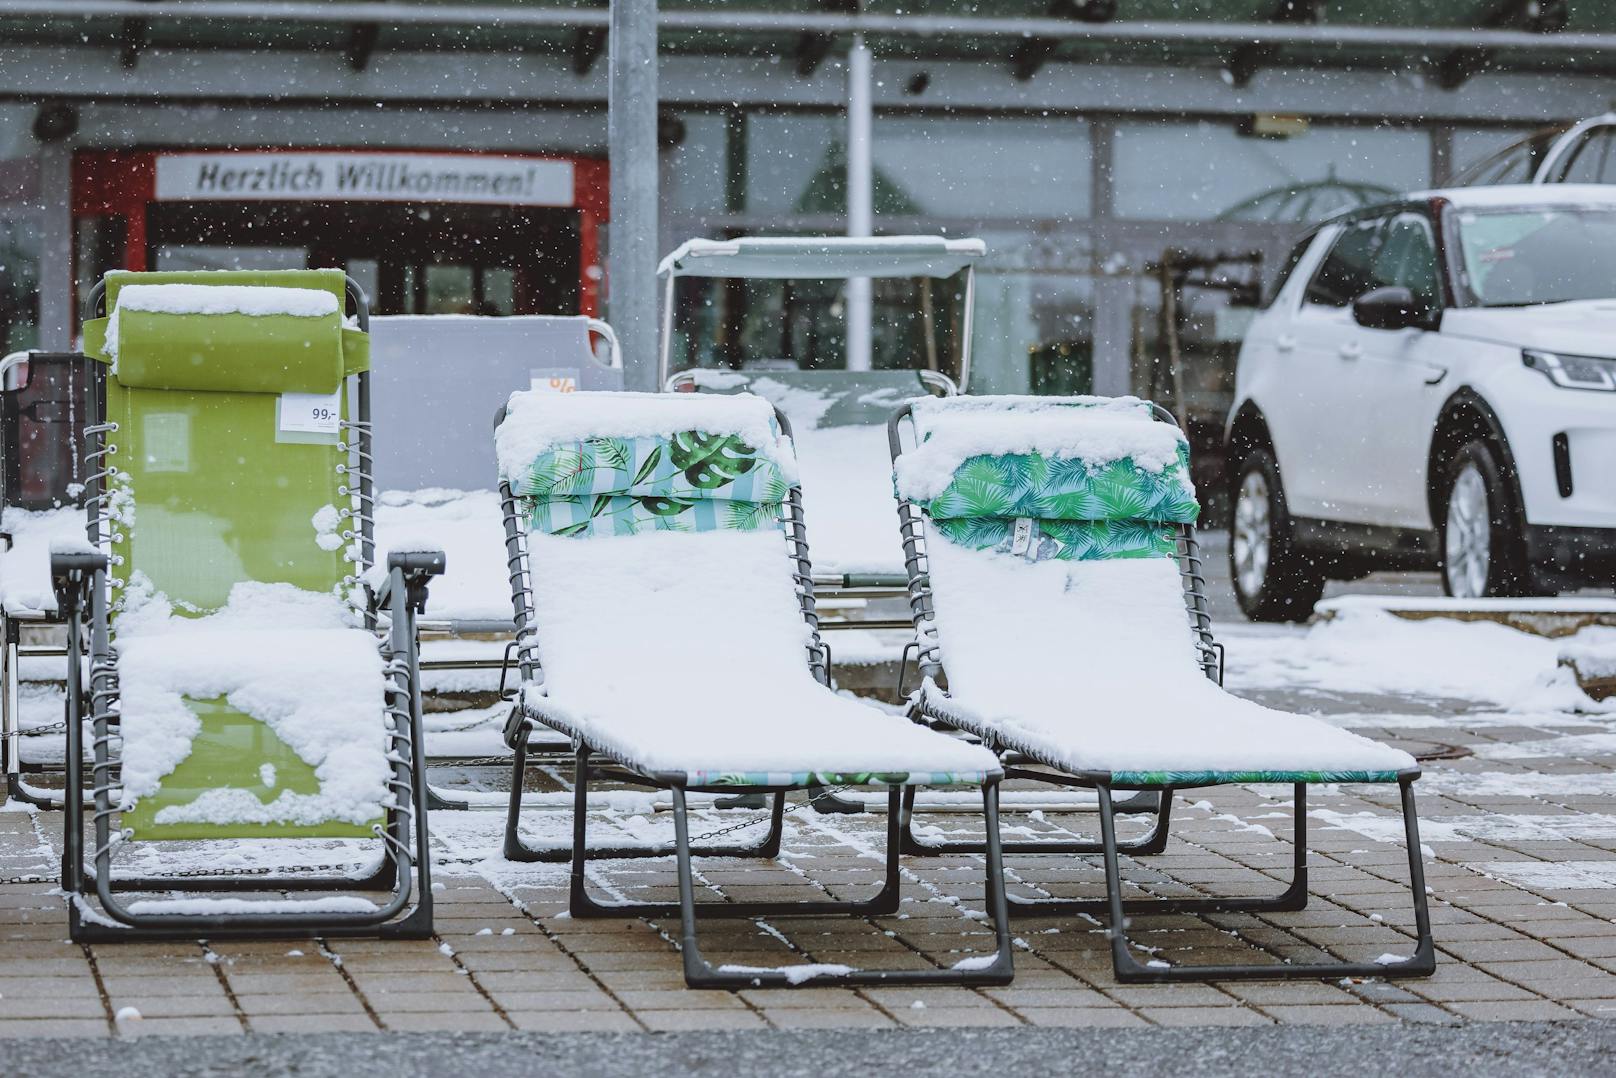 Sommerliegestühle mit Schnee am 7. April 2021 in Zell am See.